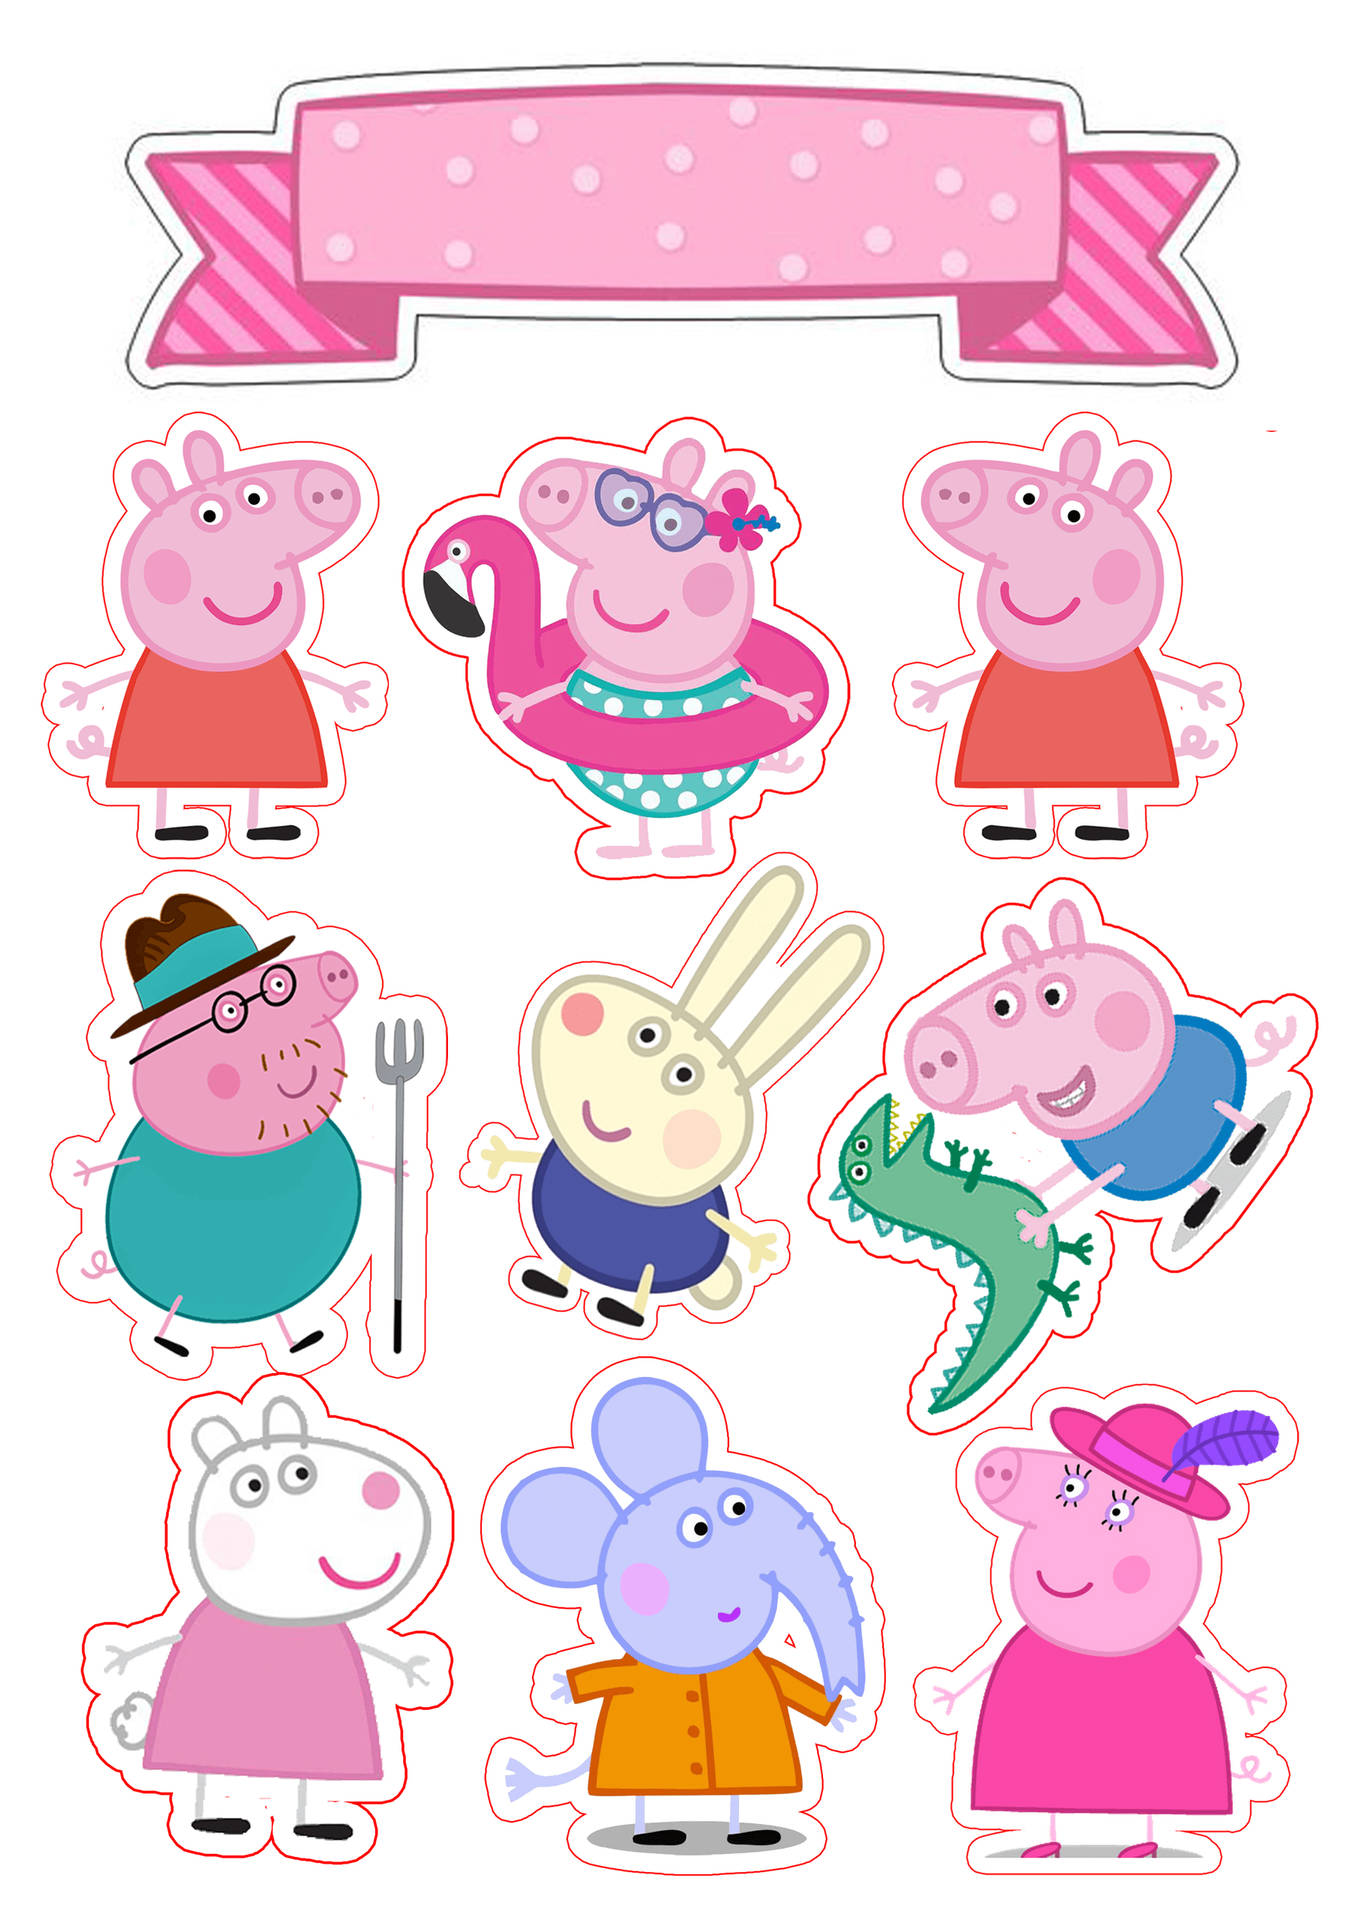 Peppa Pig iPhone Characters Sticker Design Wallpaper